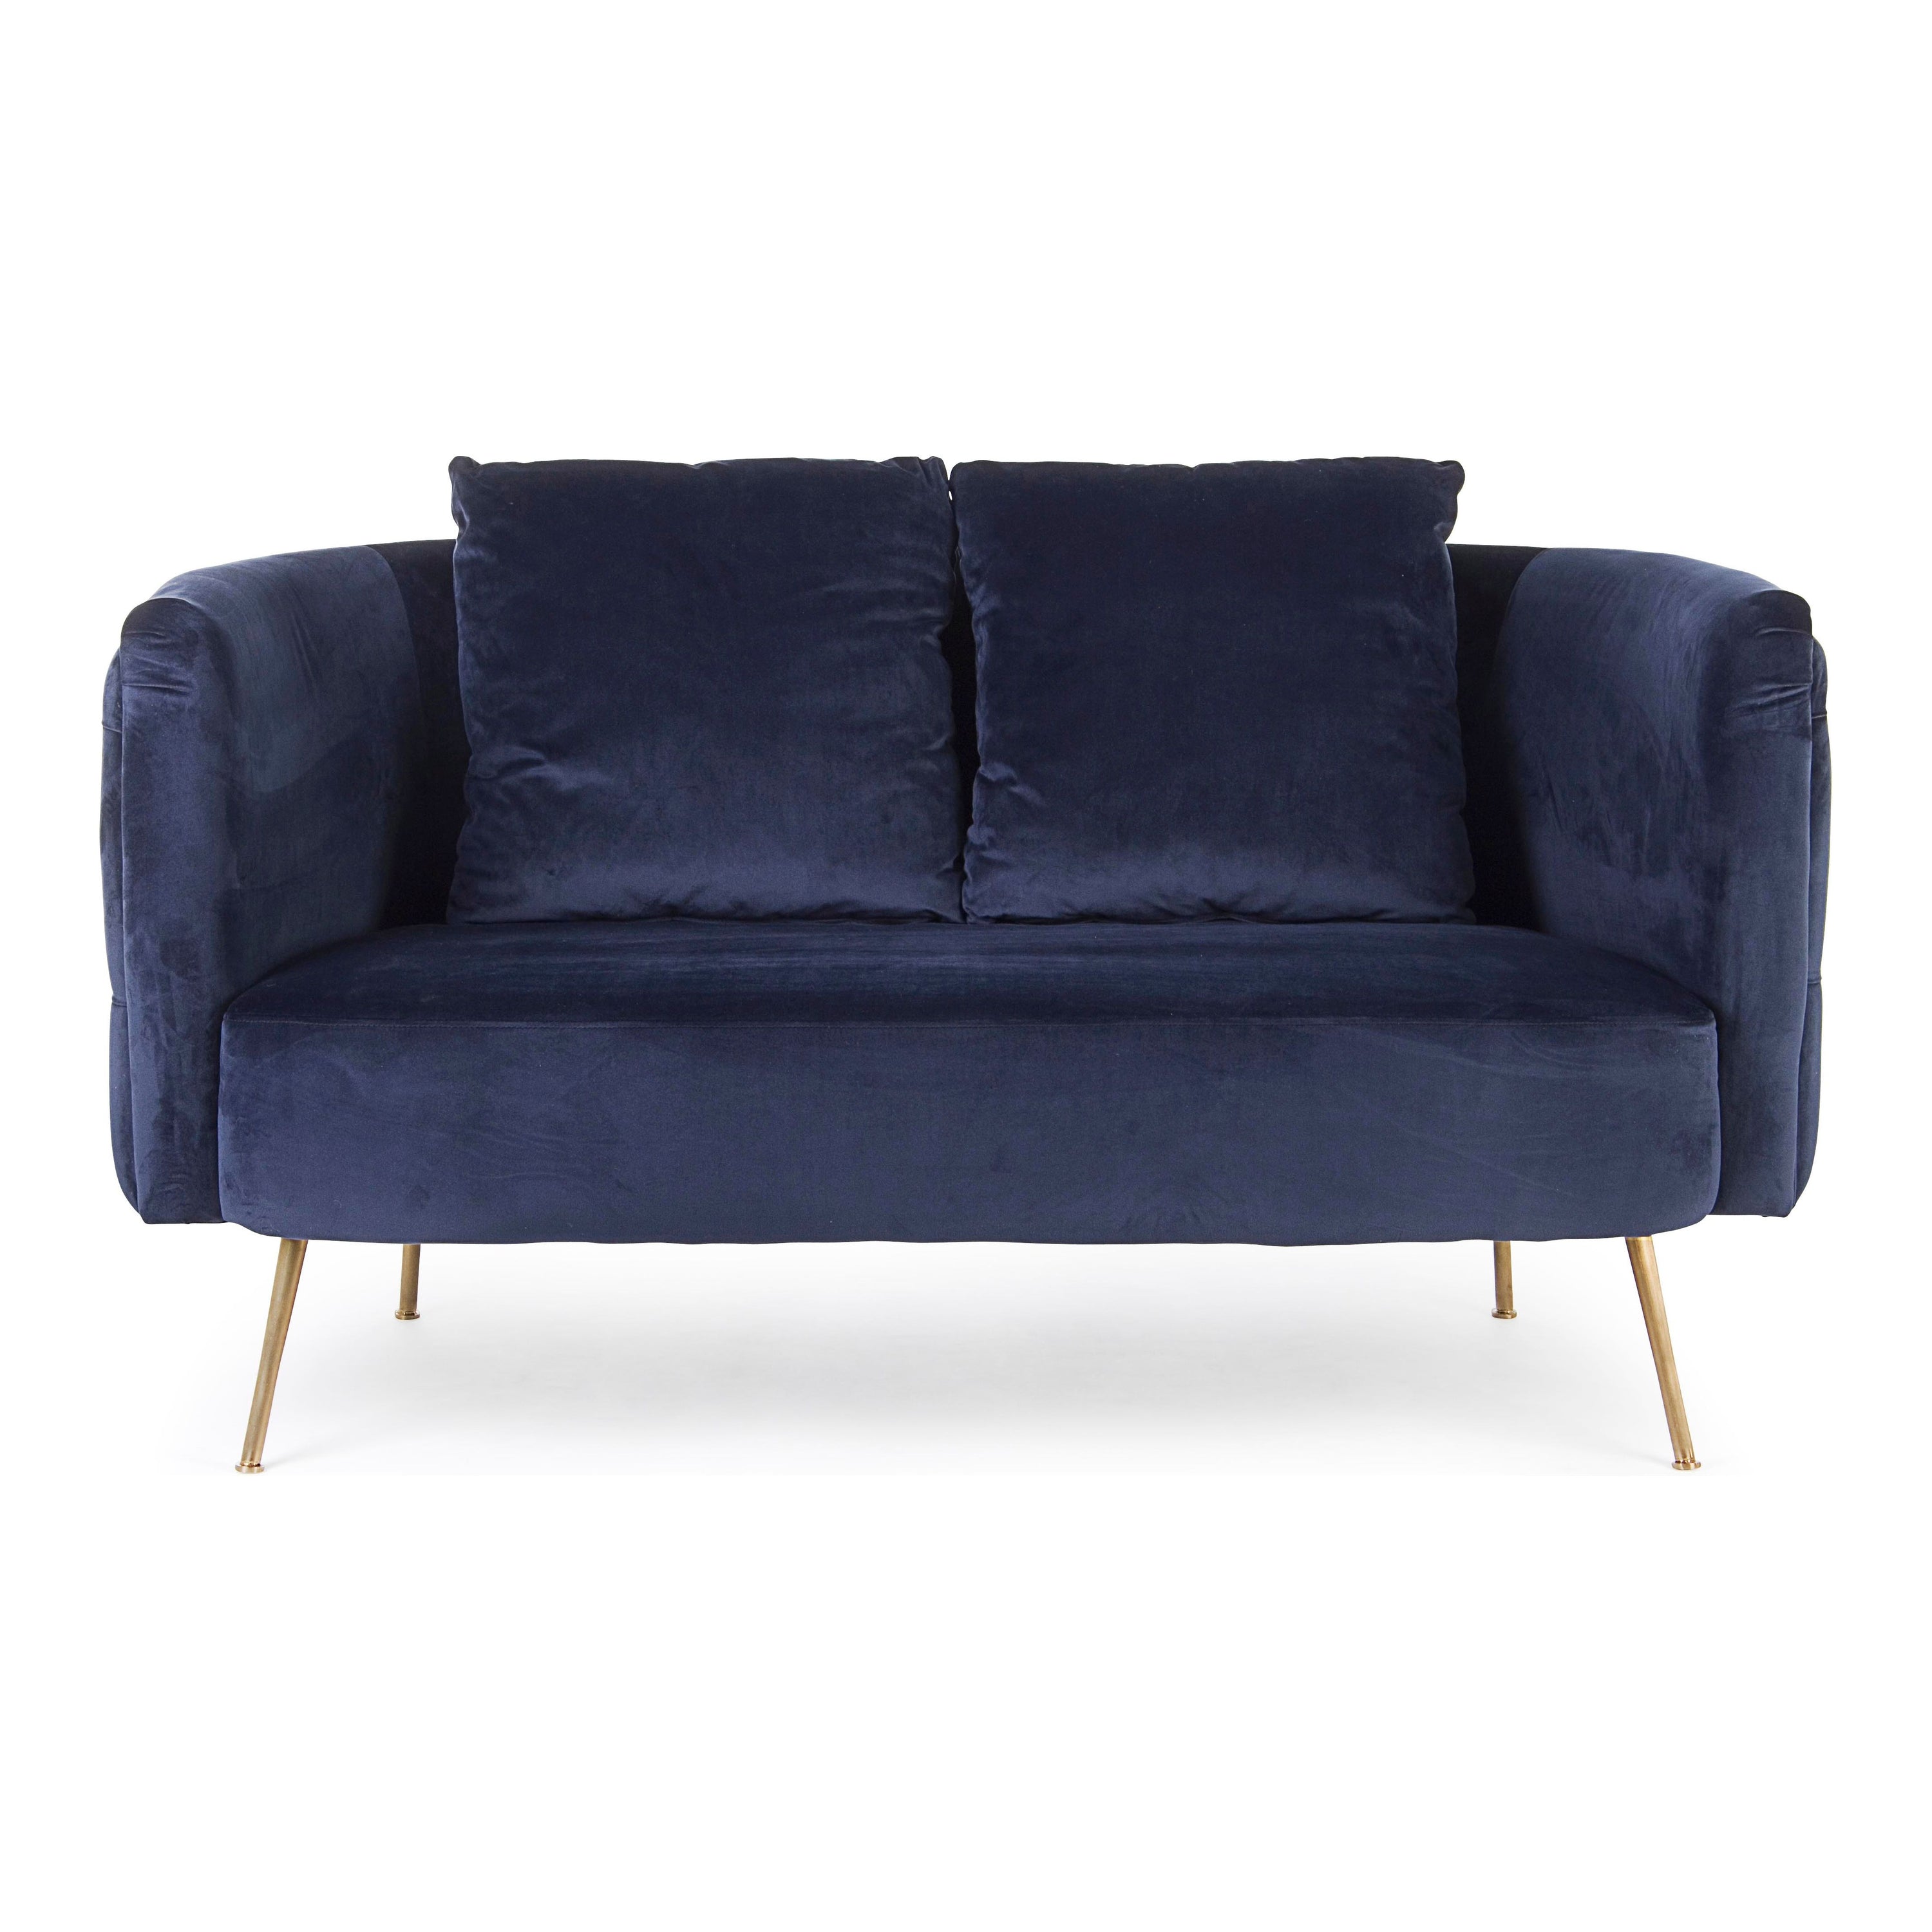 TENBURY 2 dalių sofa, mėlyna spalva